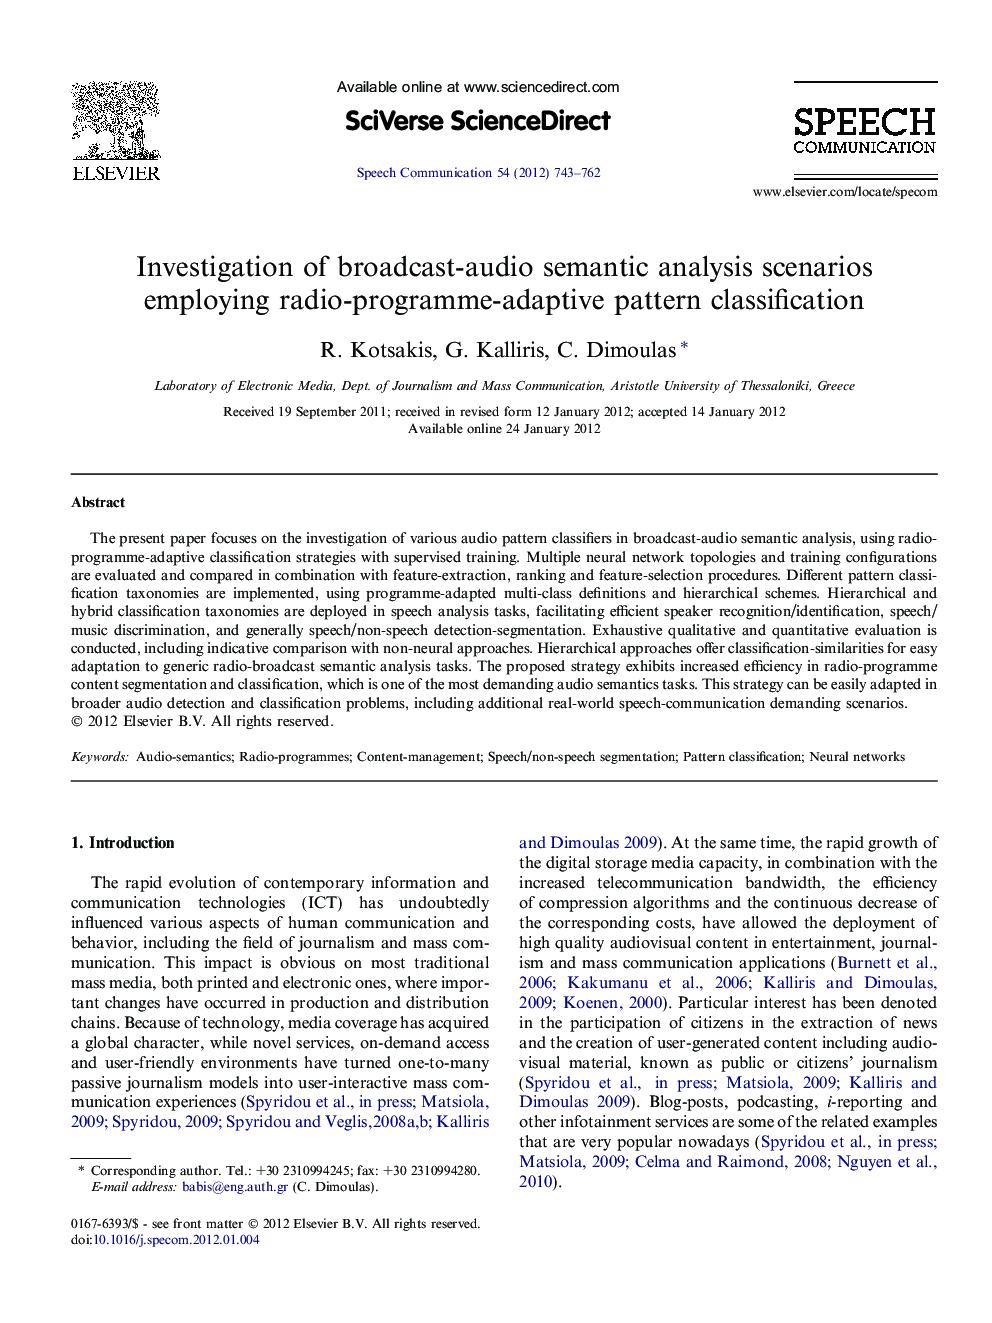 Investigation of broadcast-audio semantic analysis scenarios employing radio-programme-adaptive pattern classification